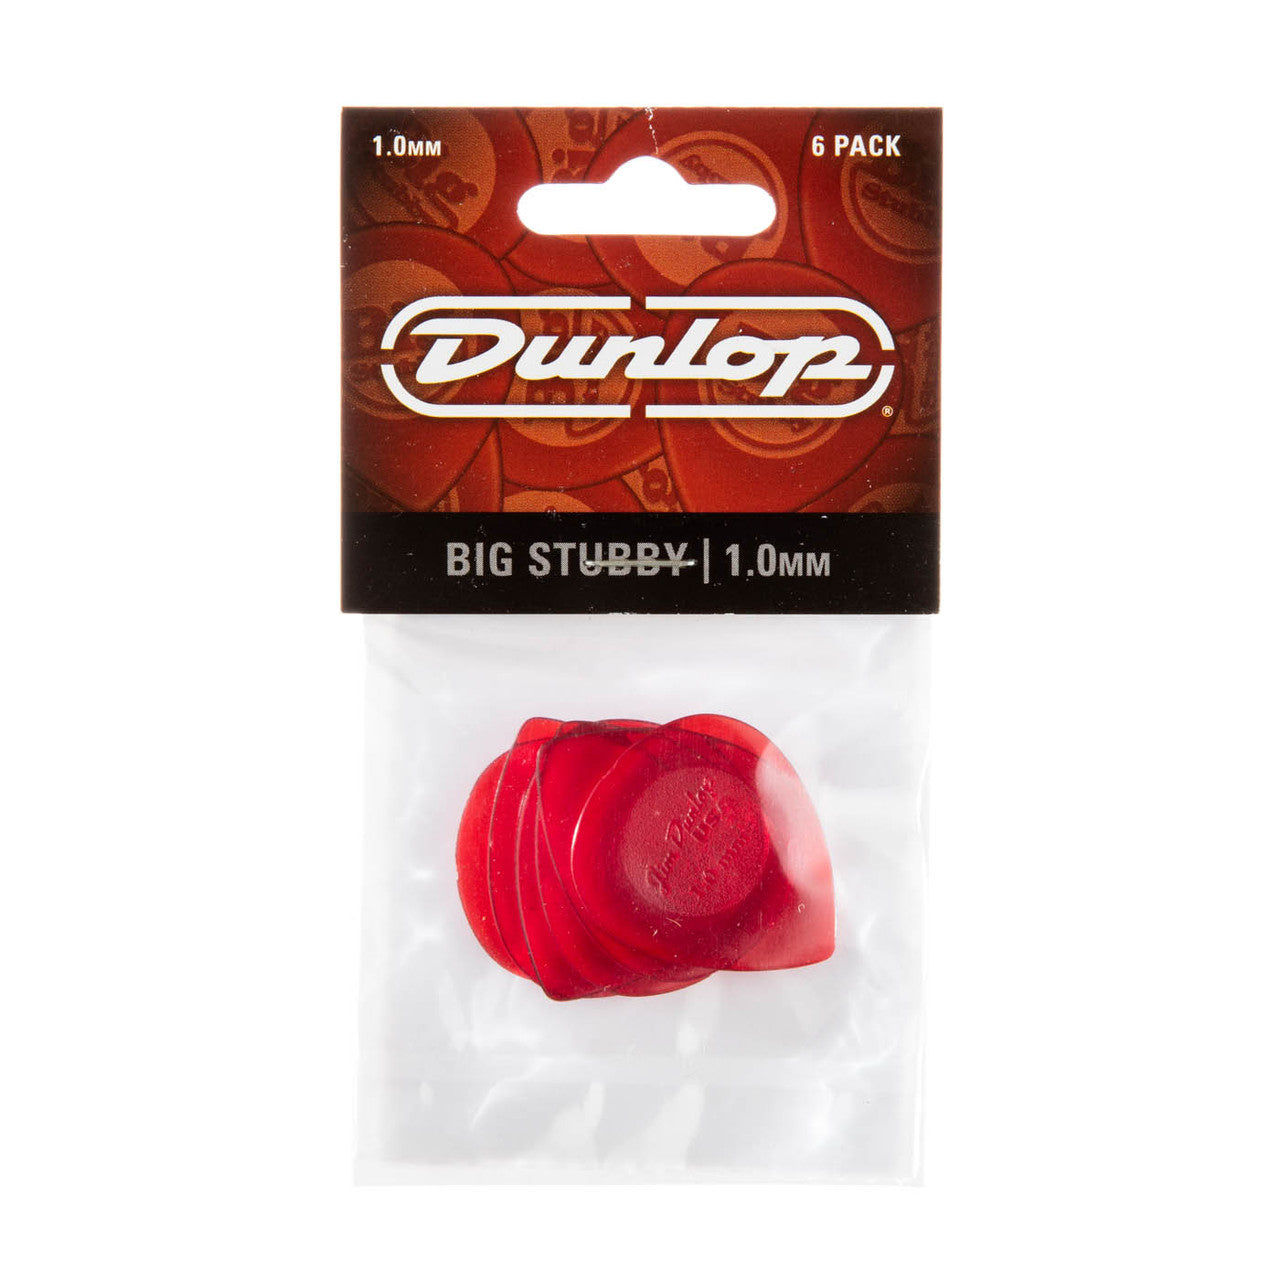 Dunlop Big Stubby Picks 6 Pack